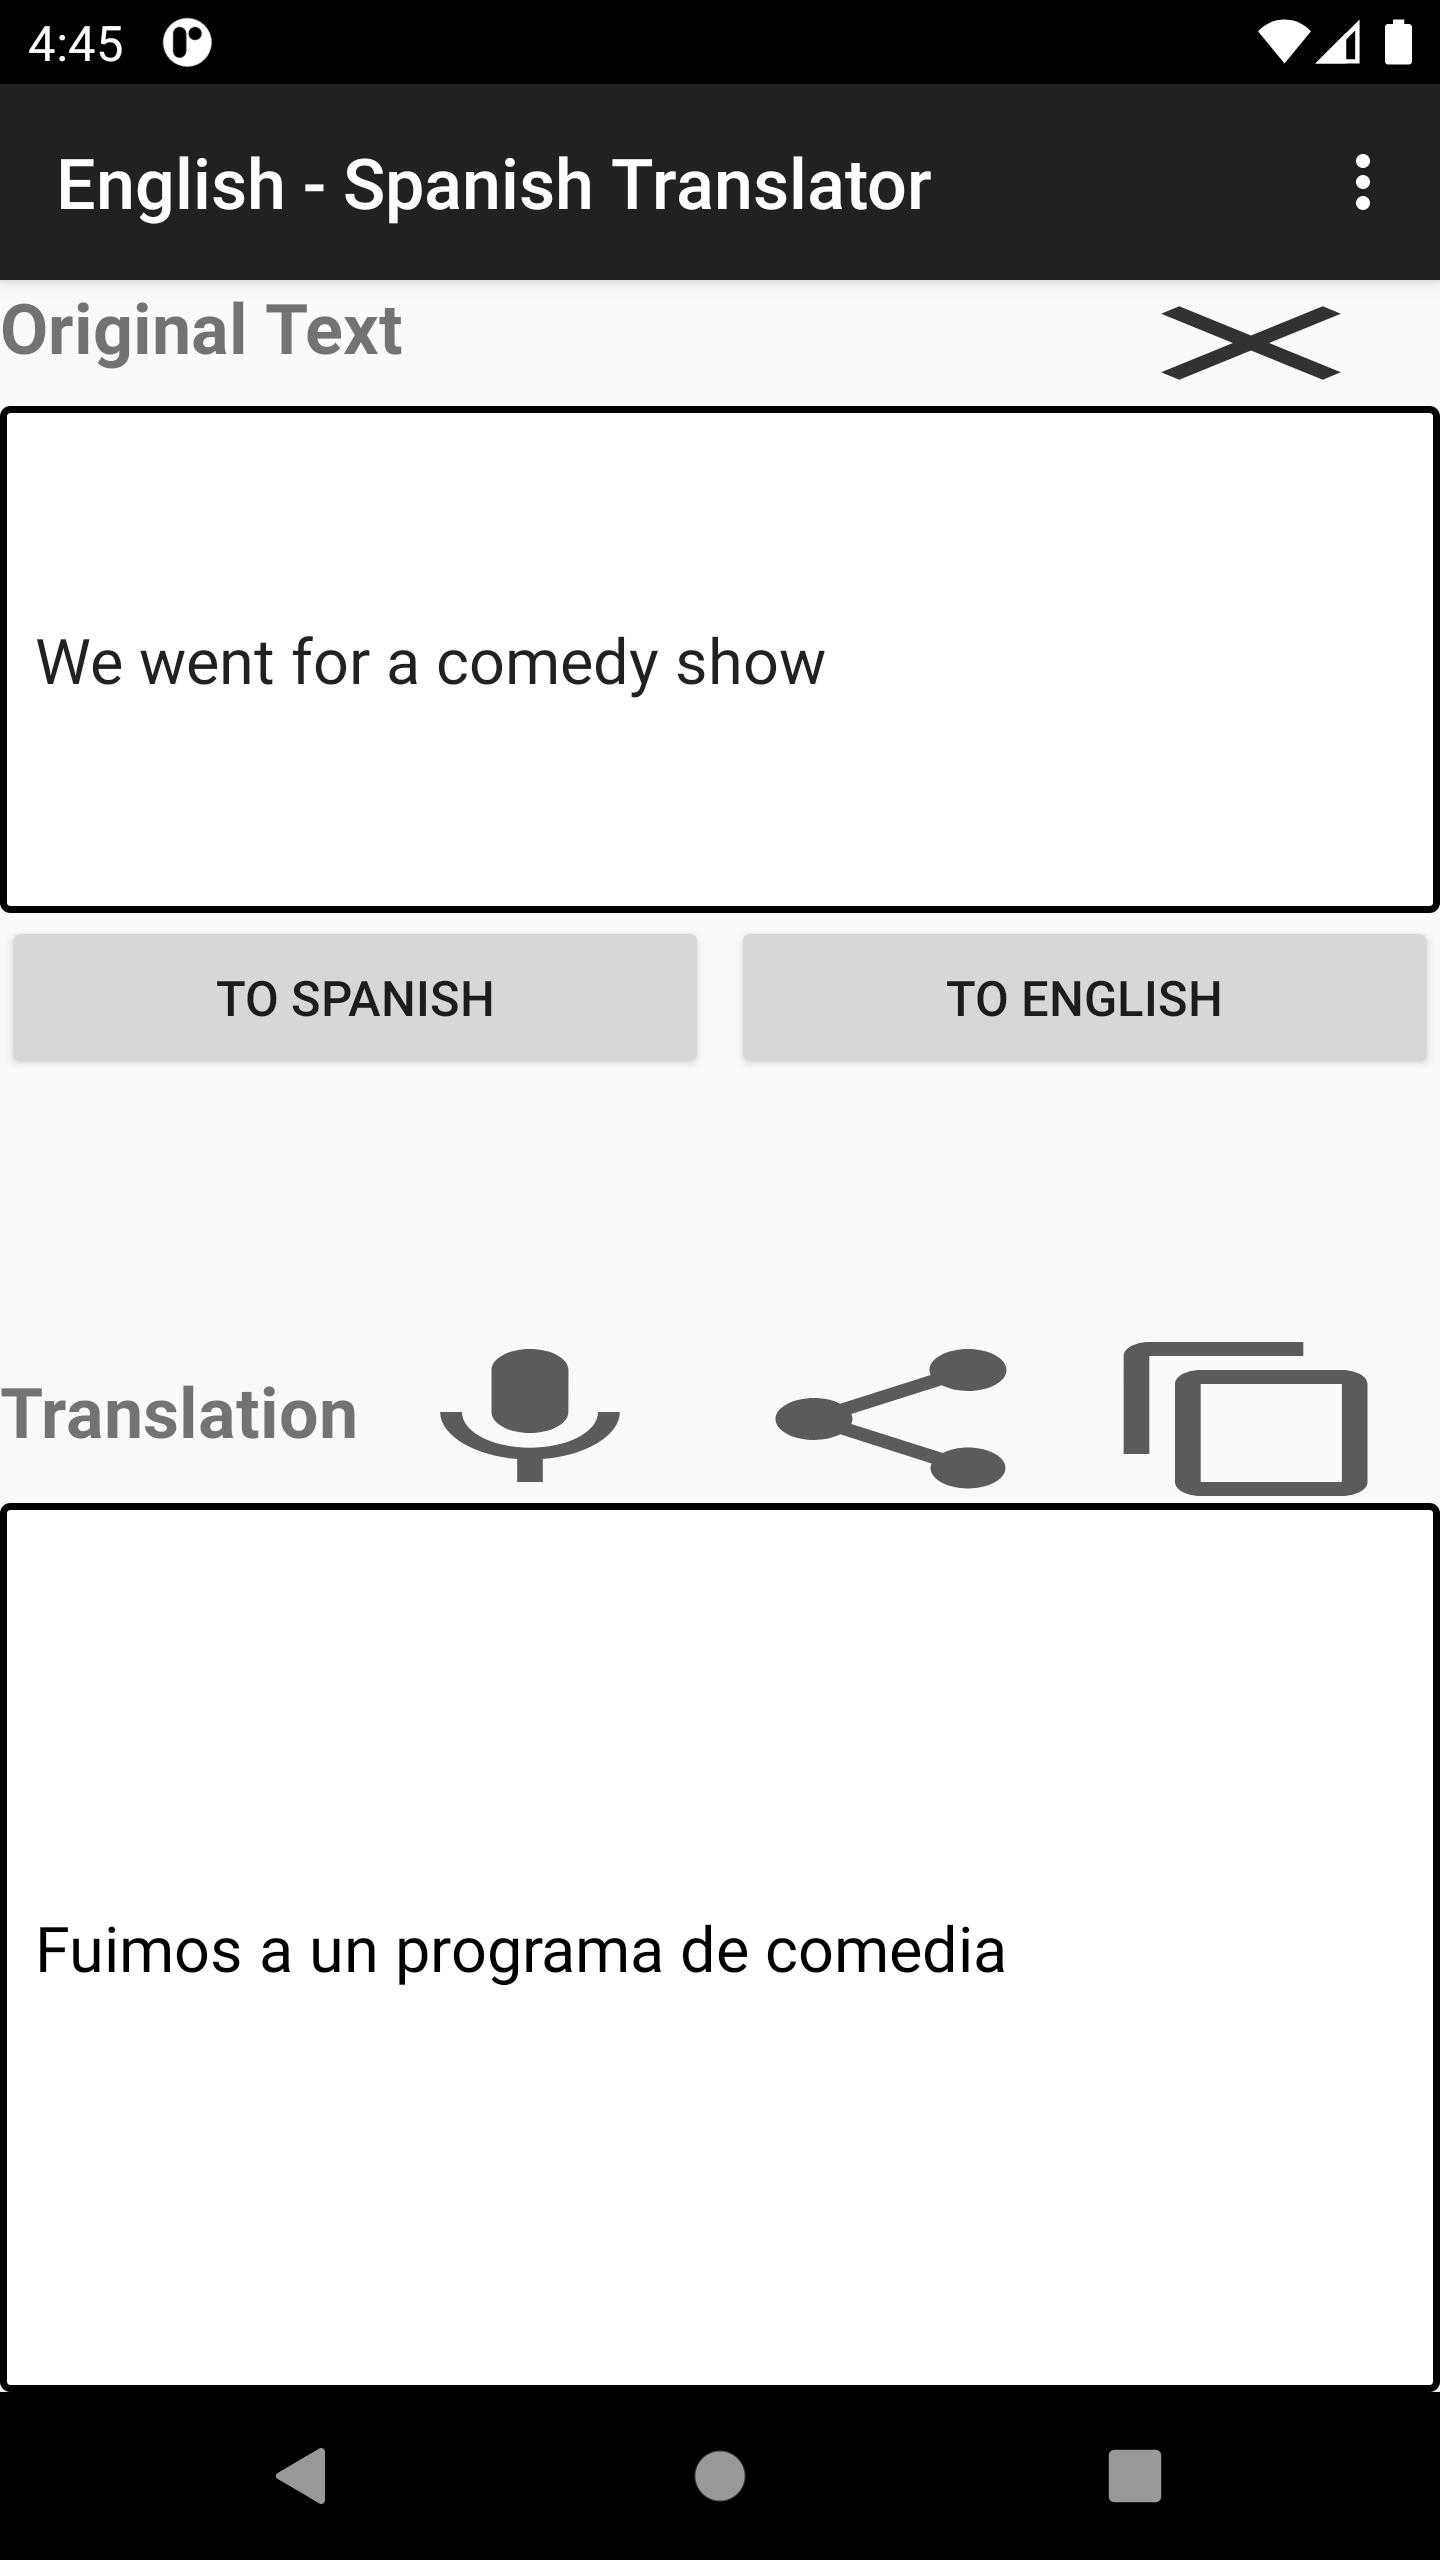 English Spanish Translator For Android Apk Download - roblox spanish translator